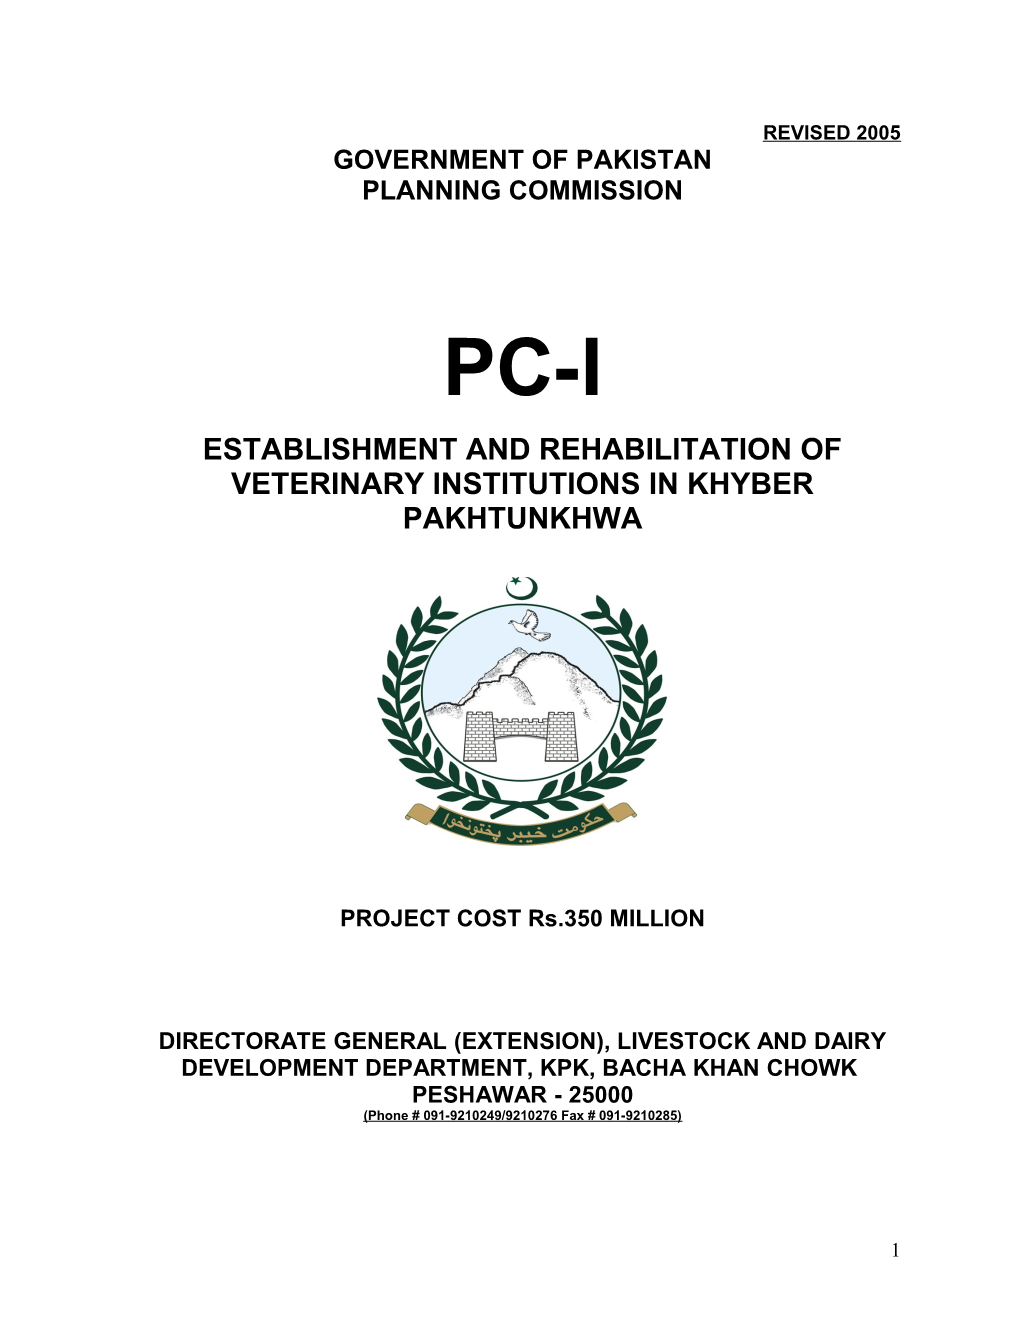 Establishment and Rehabilitation of Veterinary Institutions in Khyber Pakhtunkhwa